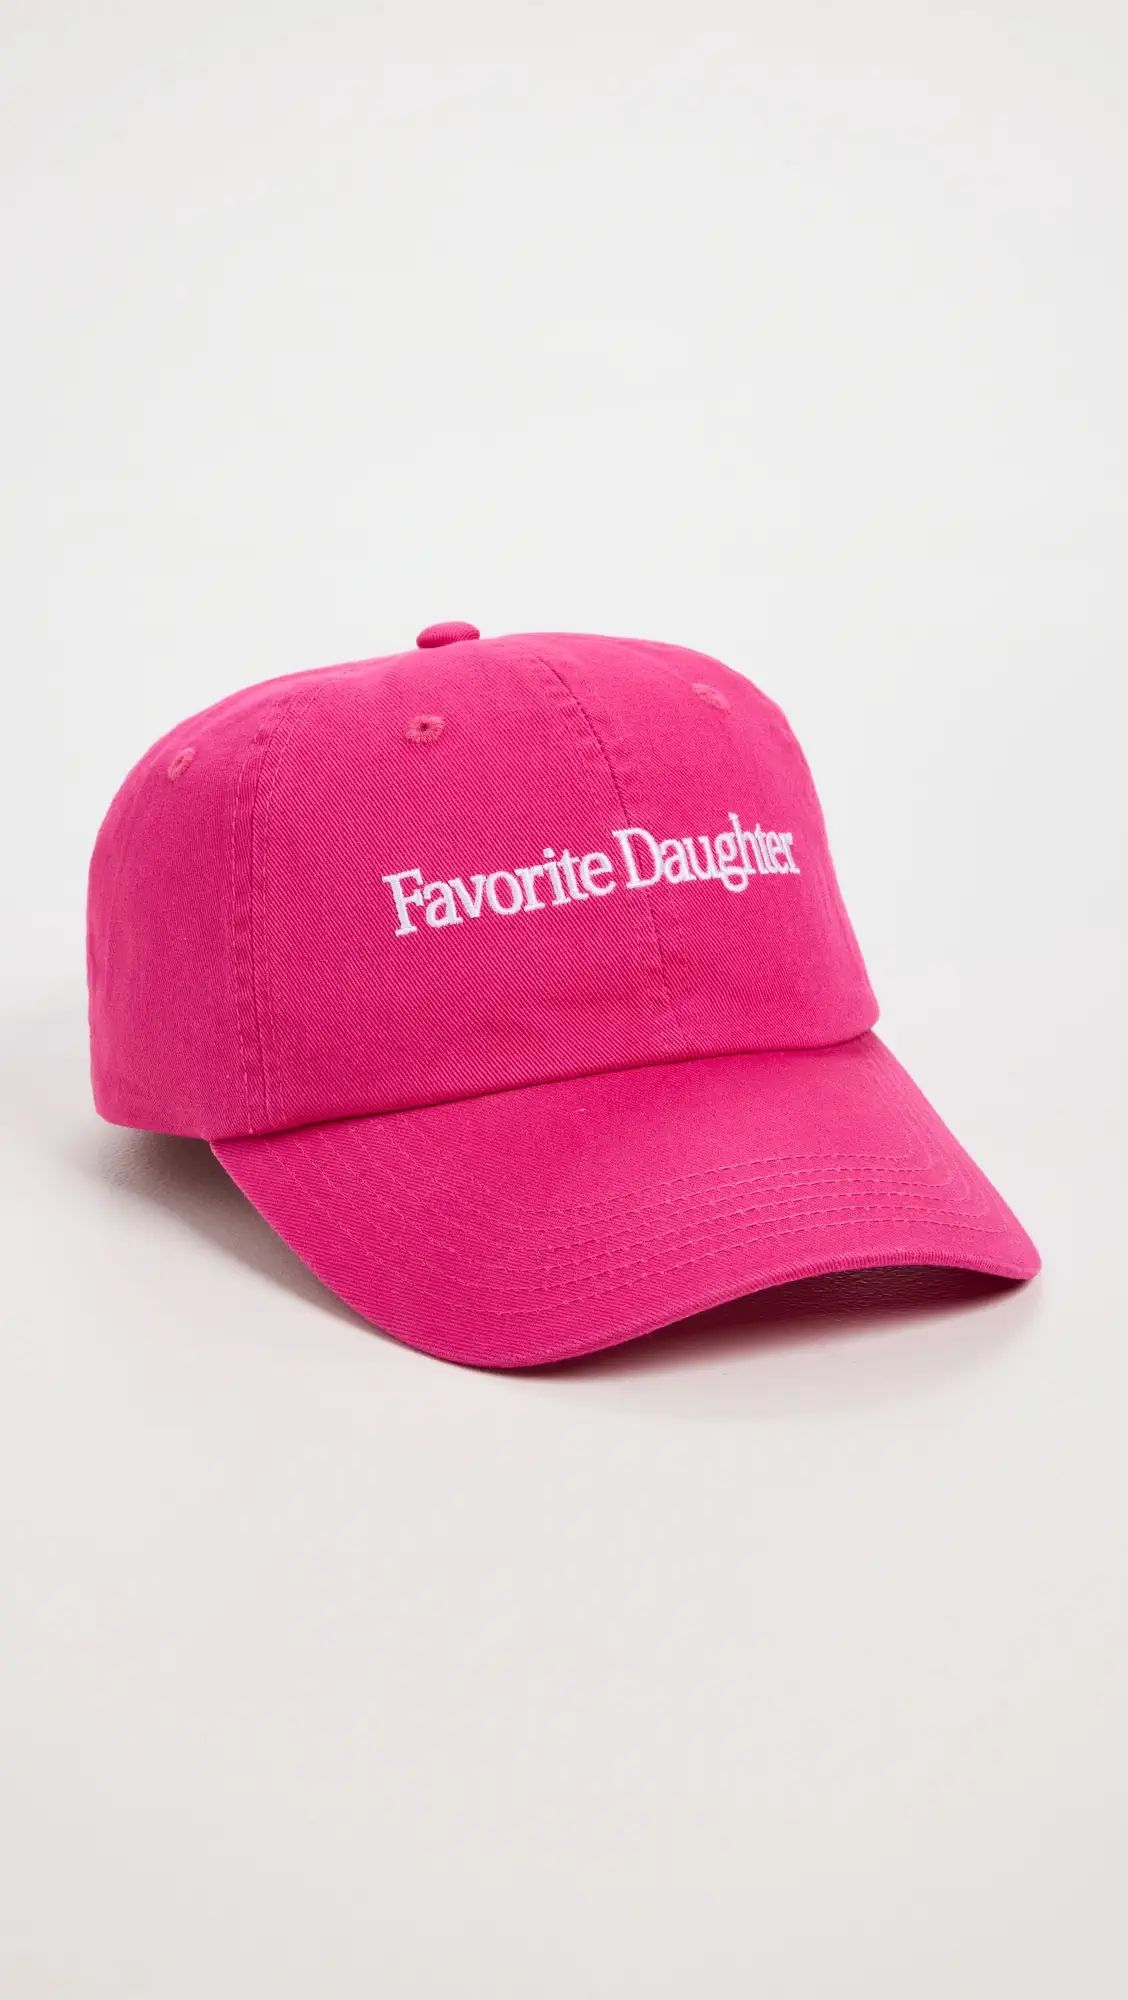 Favorite Daughter | Shopbop